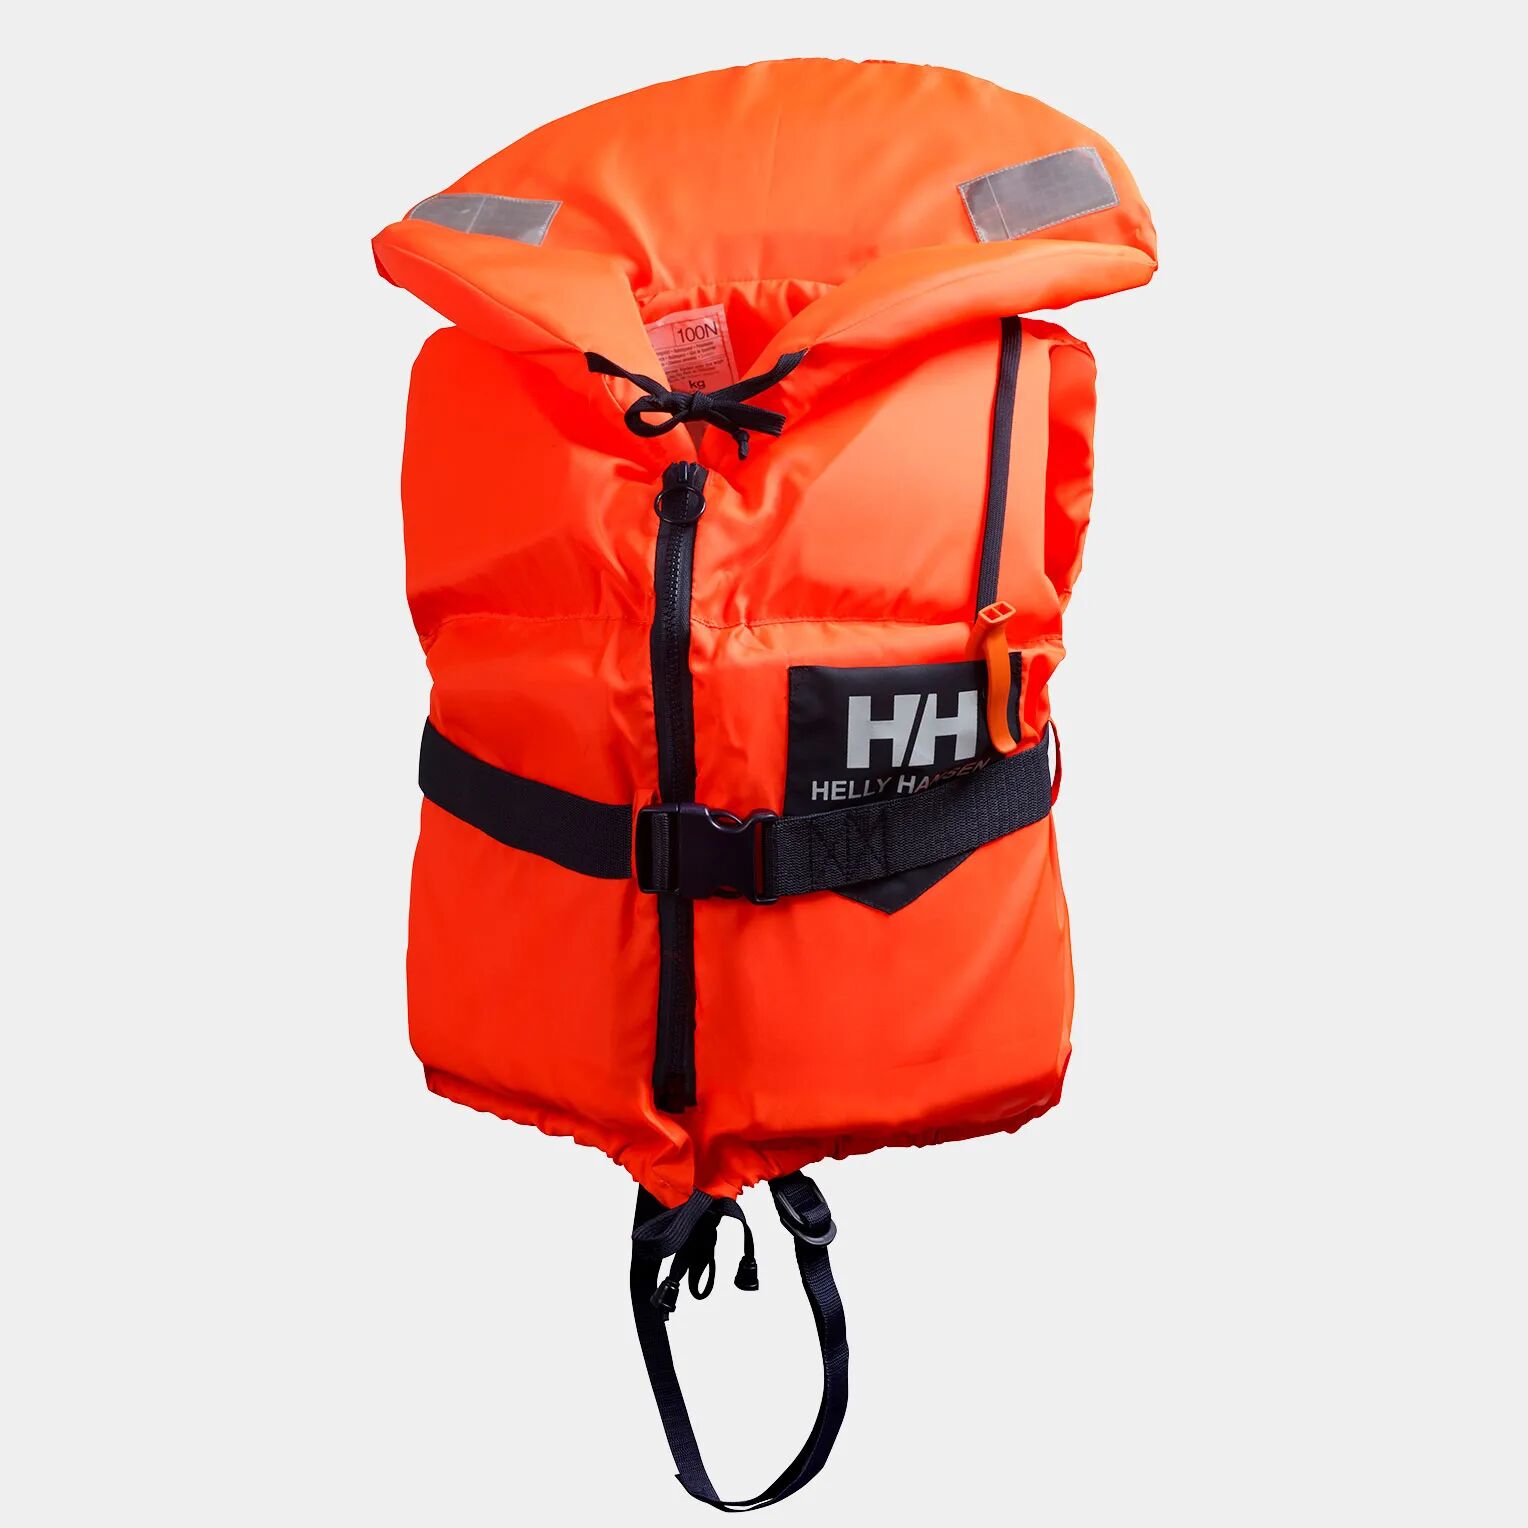 Helly Hansen Unisex W Navigare Scan Sailing Life Jacket Orange 60/90KG - Fluor Orang Orange - Unisex